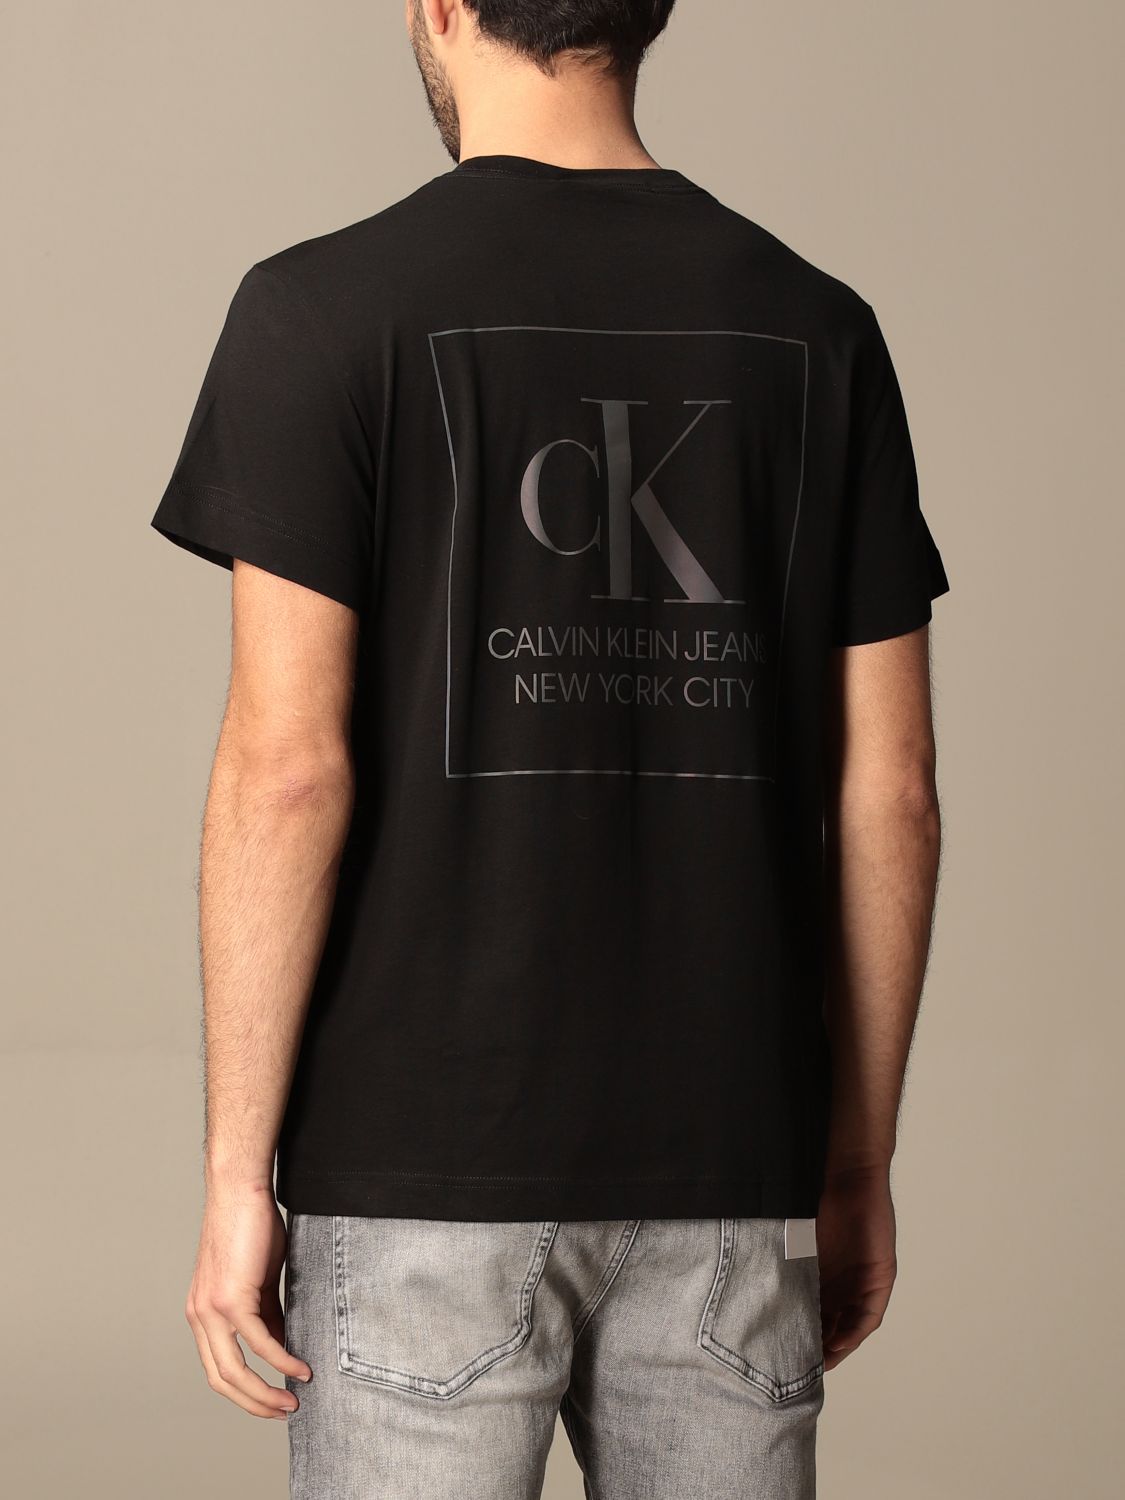 Calvin Klein Jeans Outlet: cotton t-shirt with logo - Black | T-Shirt ...